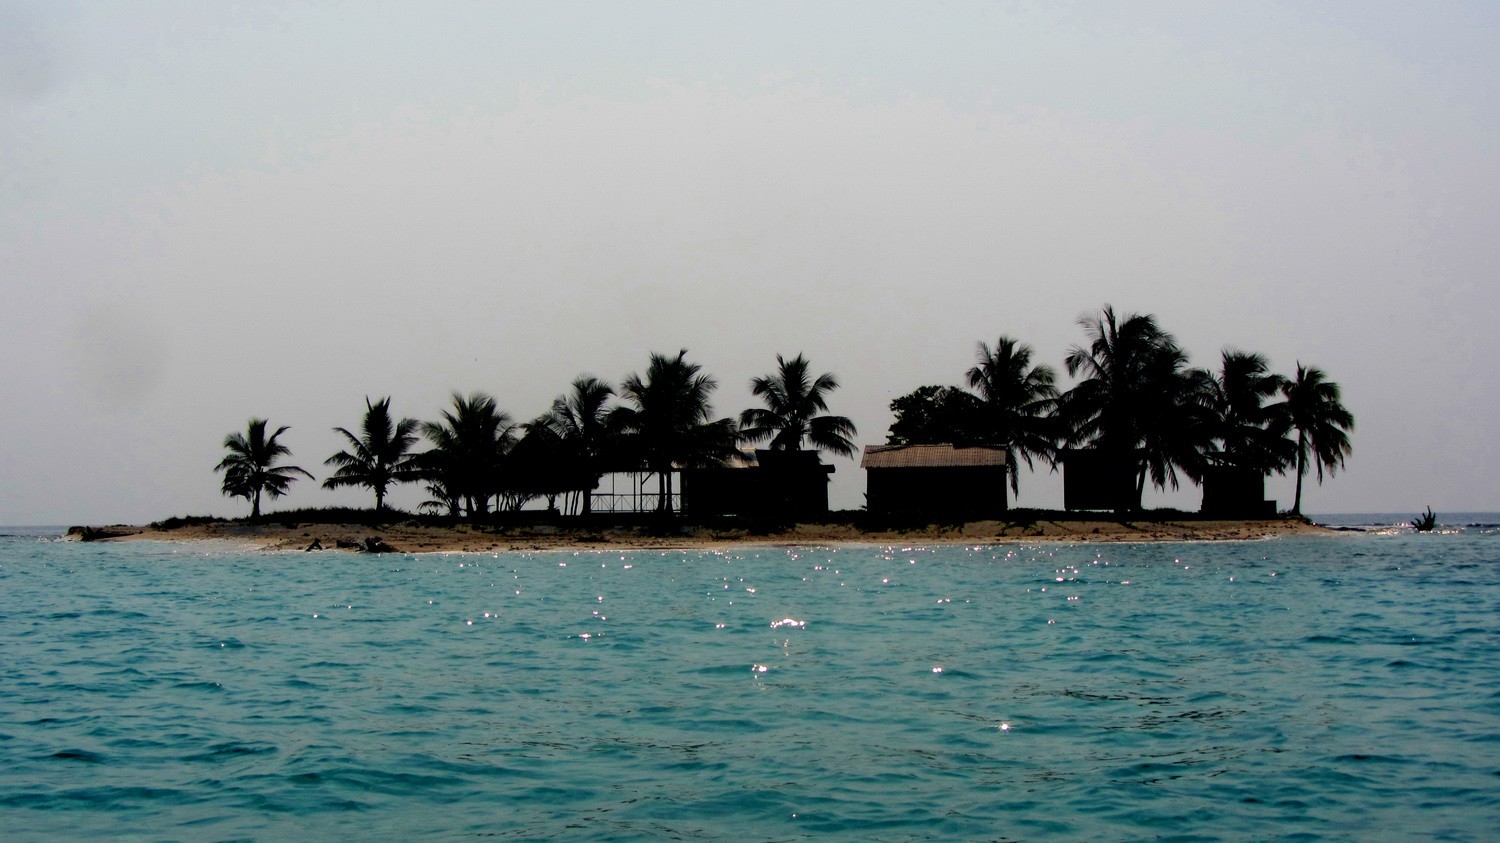 Little island of the Cayos Cochinos 20 kilometers northeast of la Ceiba